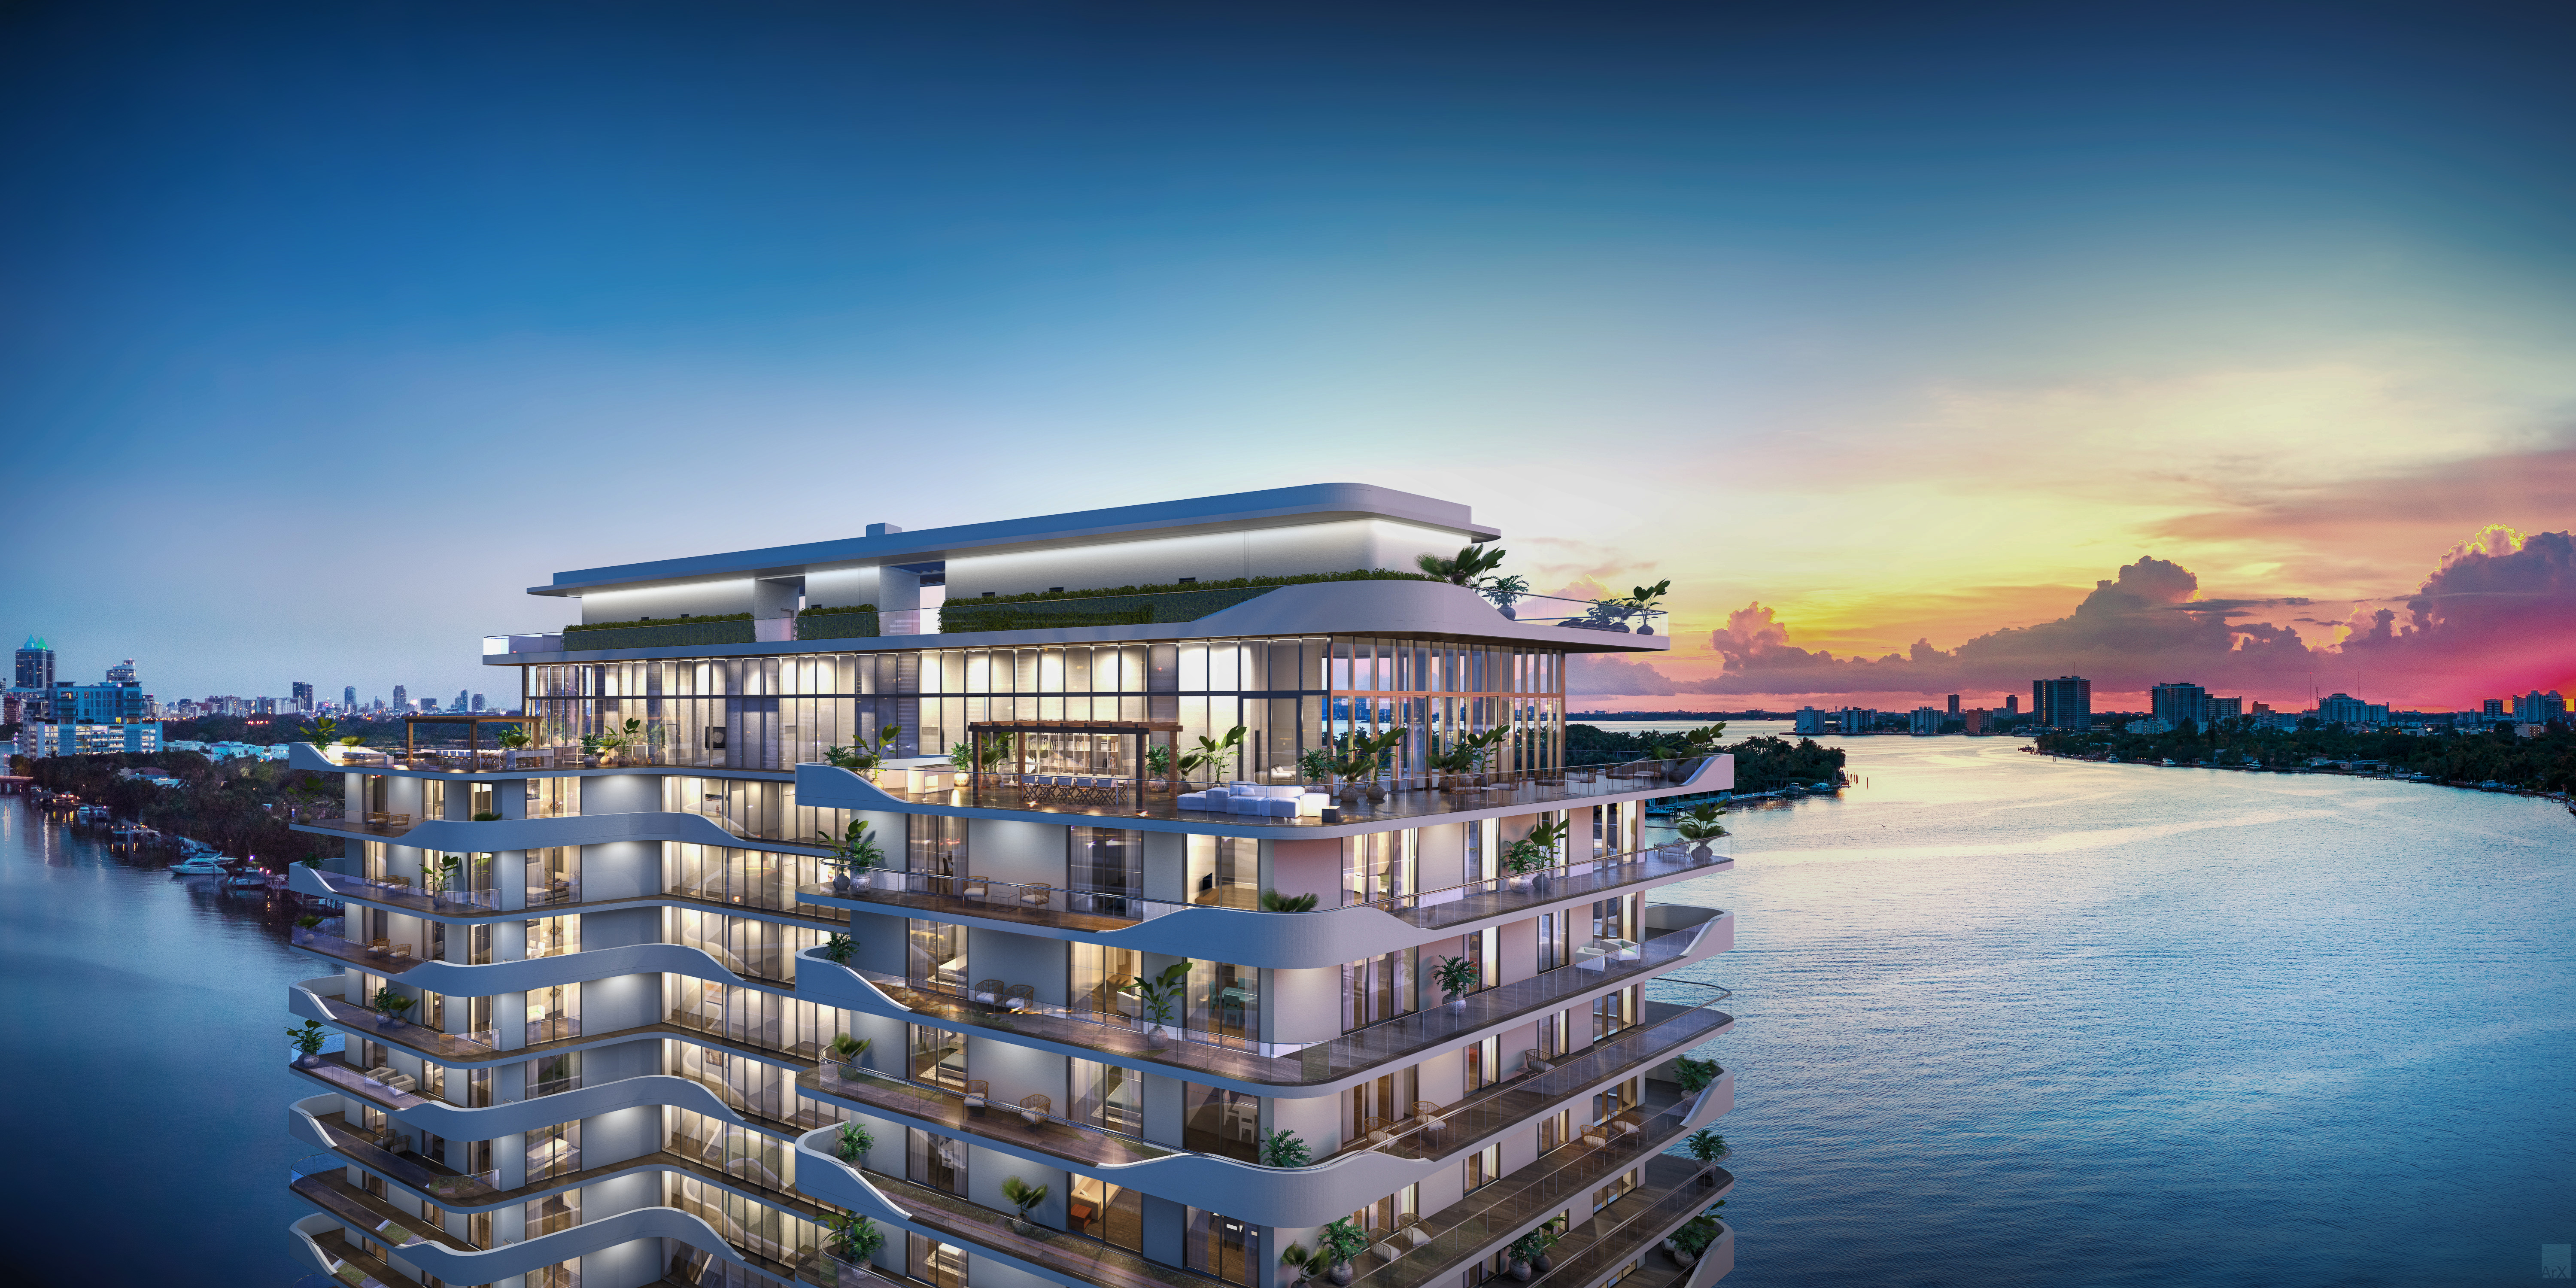 Miami Inmobiliaria Monaco Yacht Club